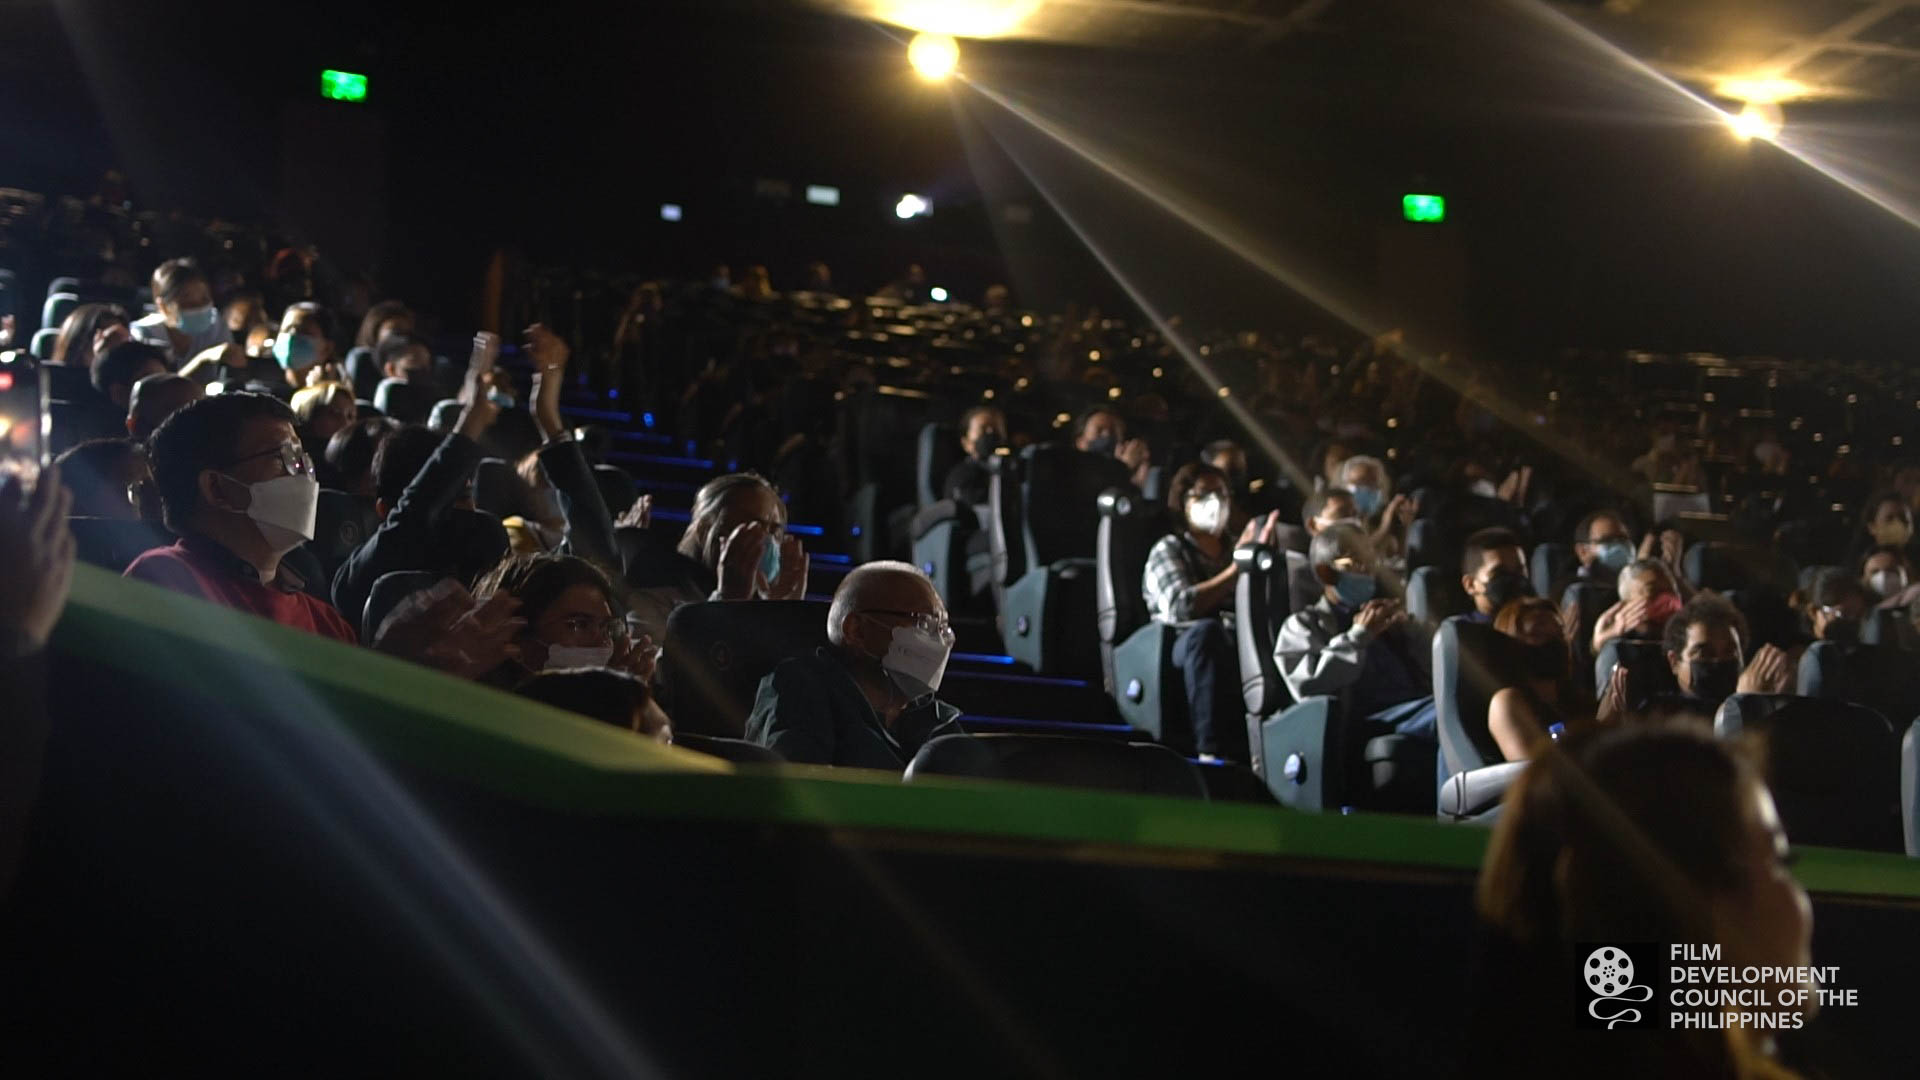 PFIM Opening Ceremony at Cinema 6 of TriNoma Malls in Quezon City